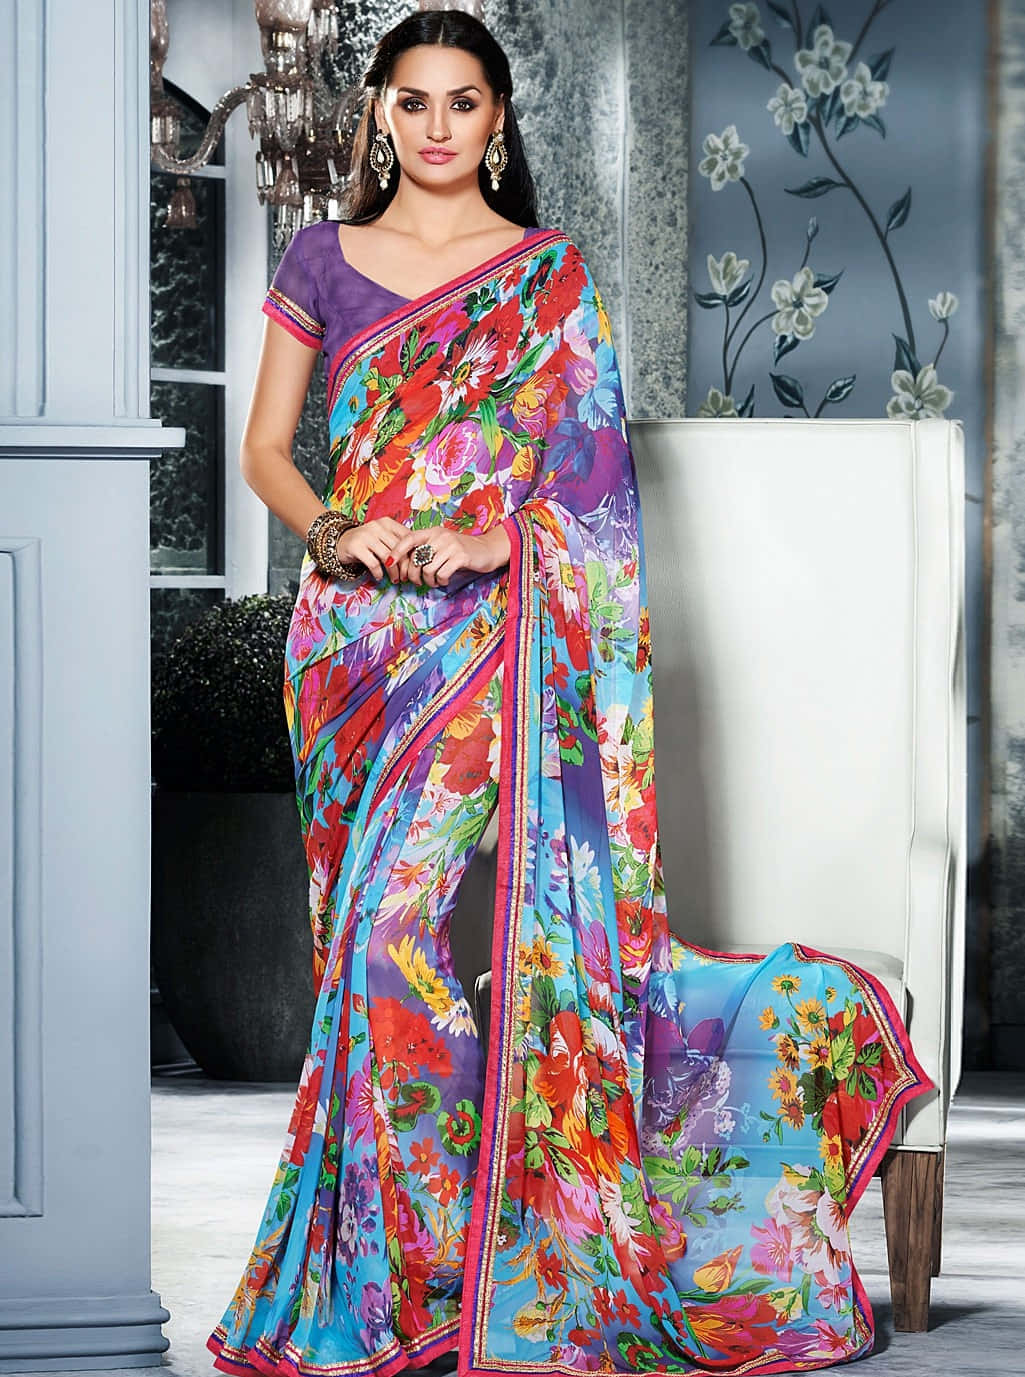 A Beautiful Woman Wearing A Colorful Printed Saree